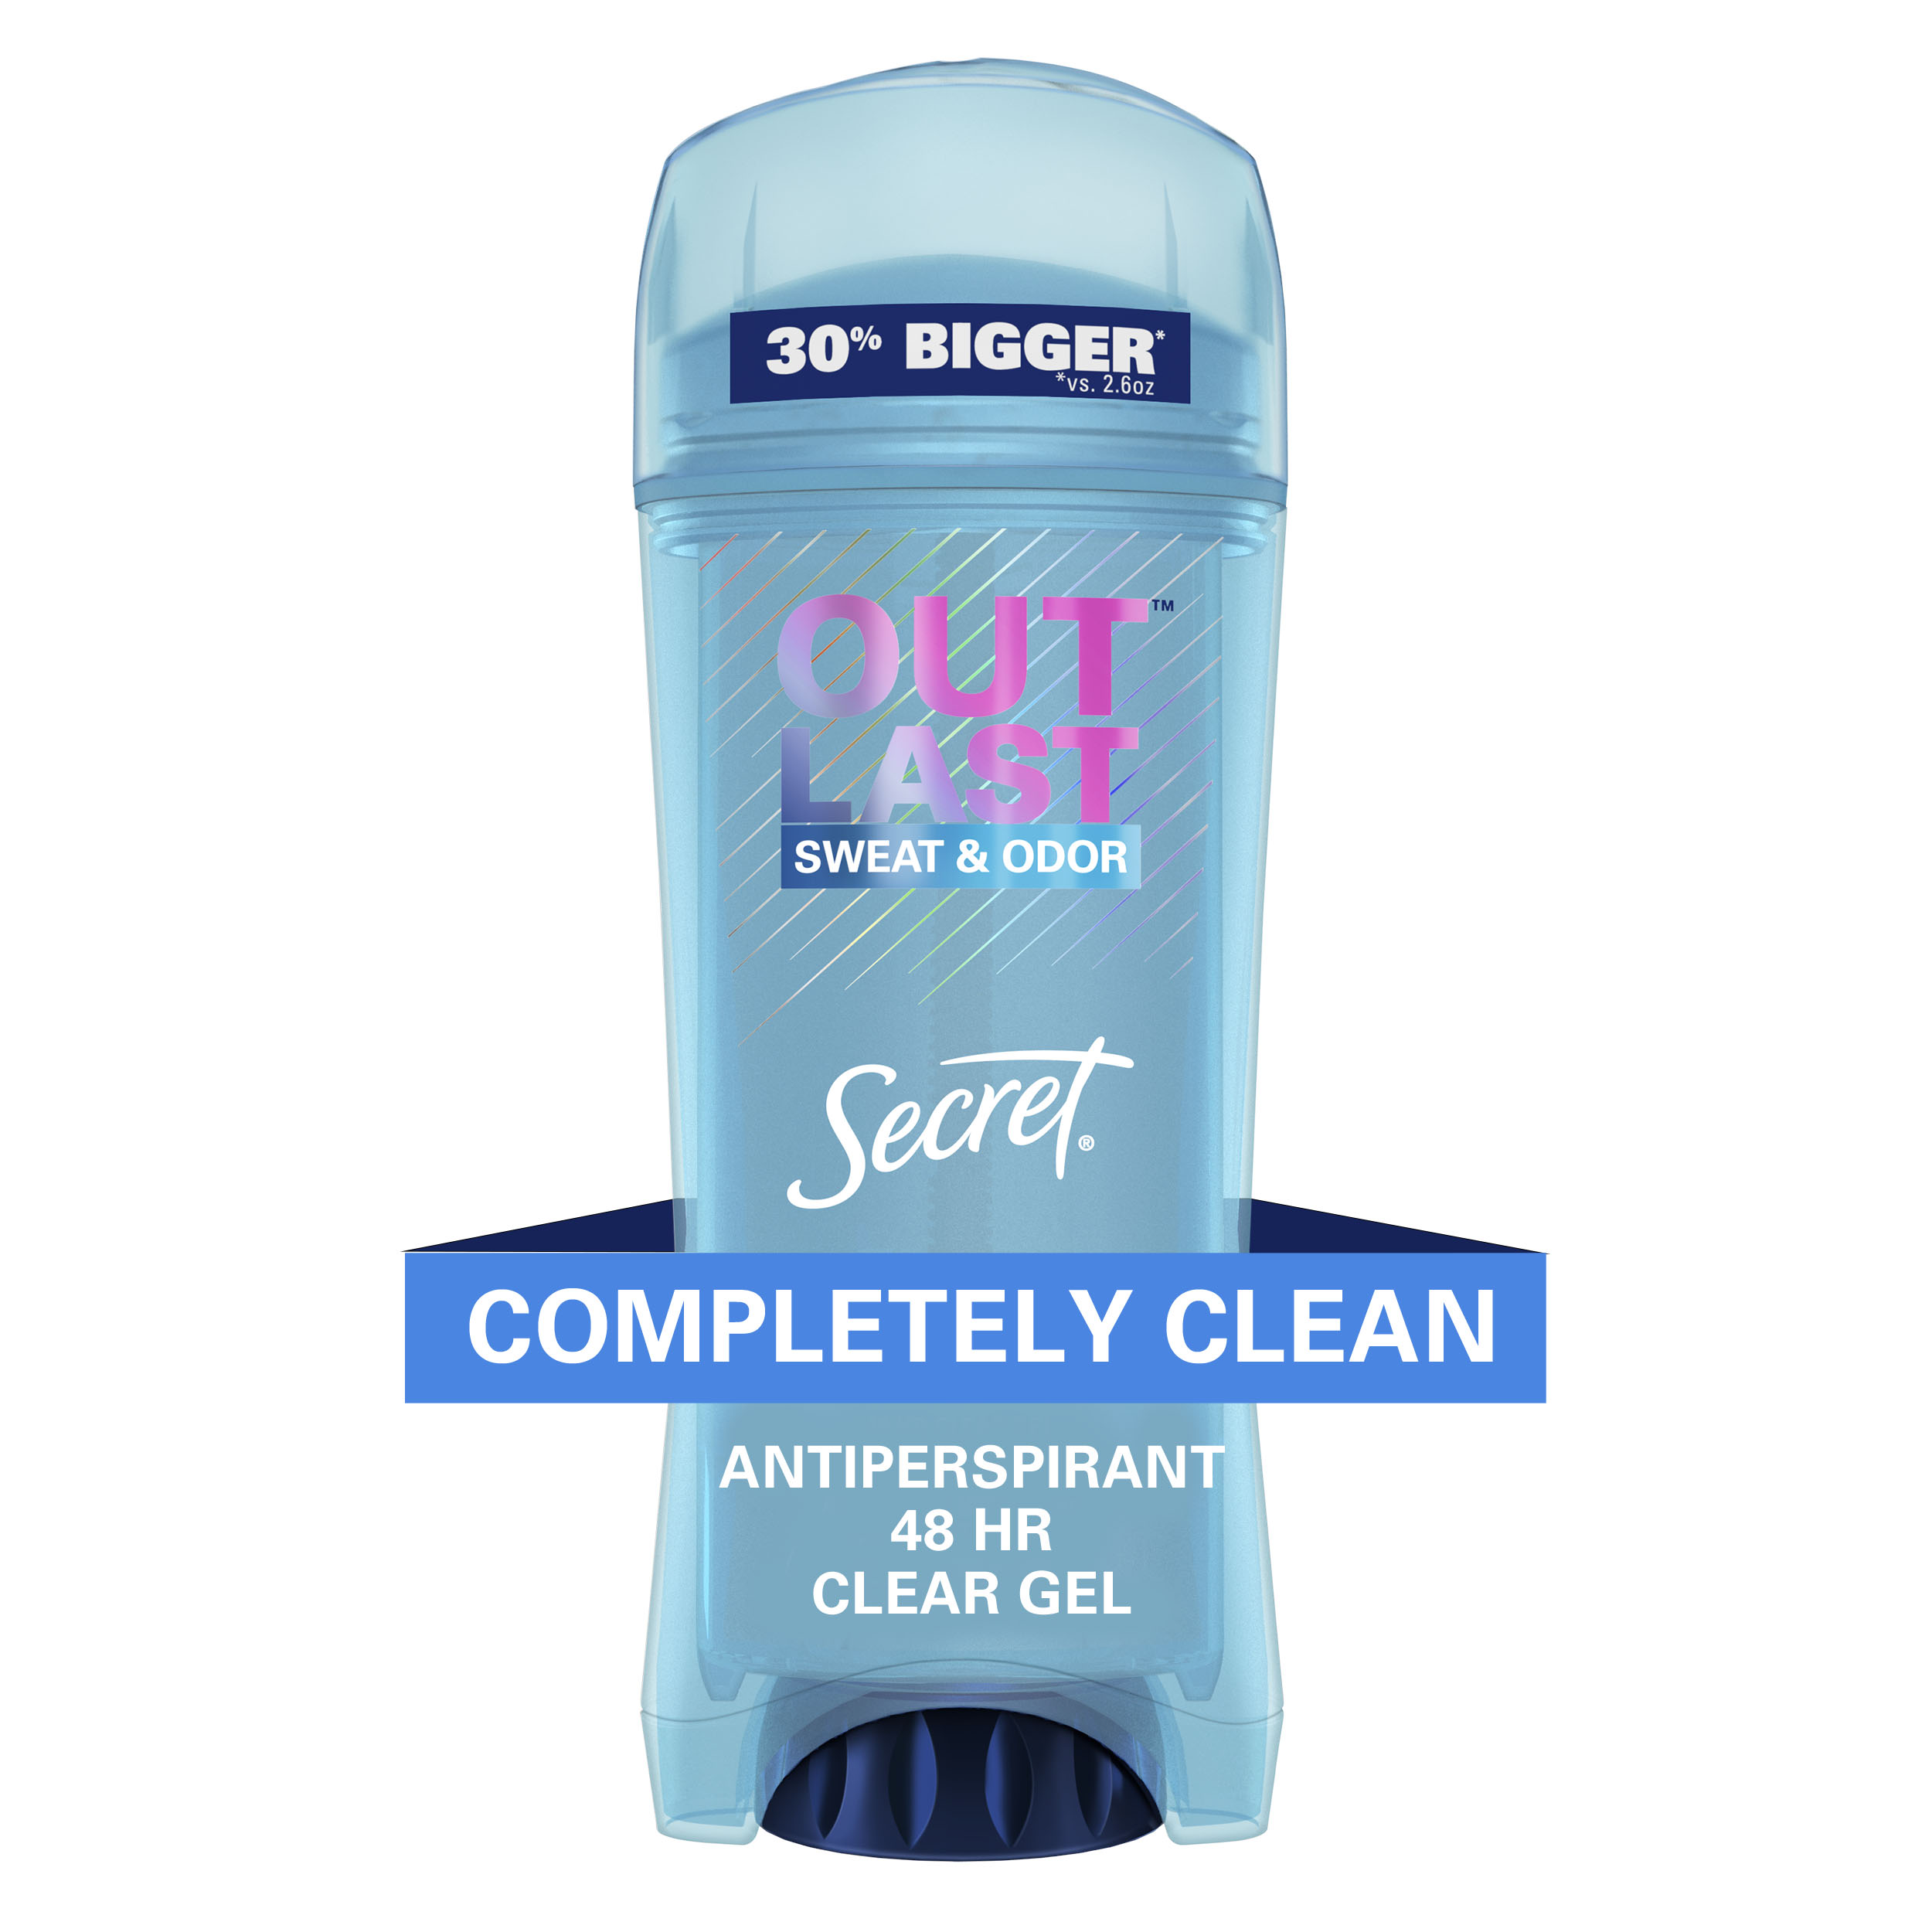 Secret Outlast Clear Gel Antiperspirant Deodorant for Women Completely Clean, 3.4 oz - image 1 of 10